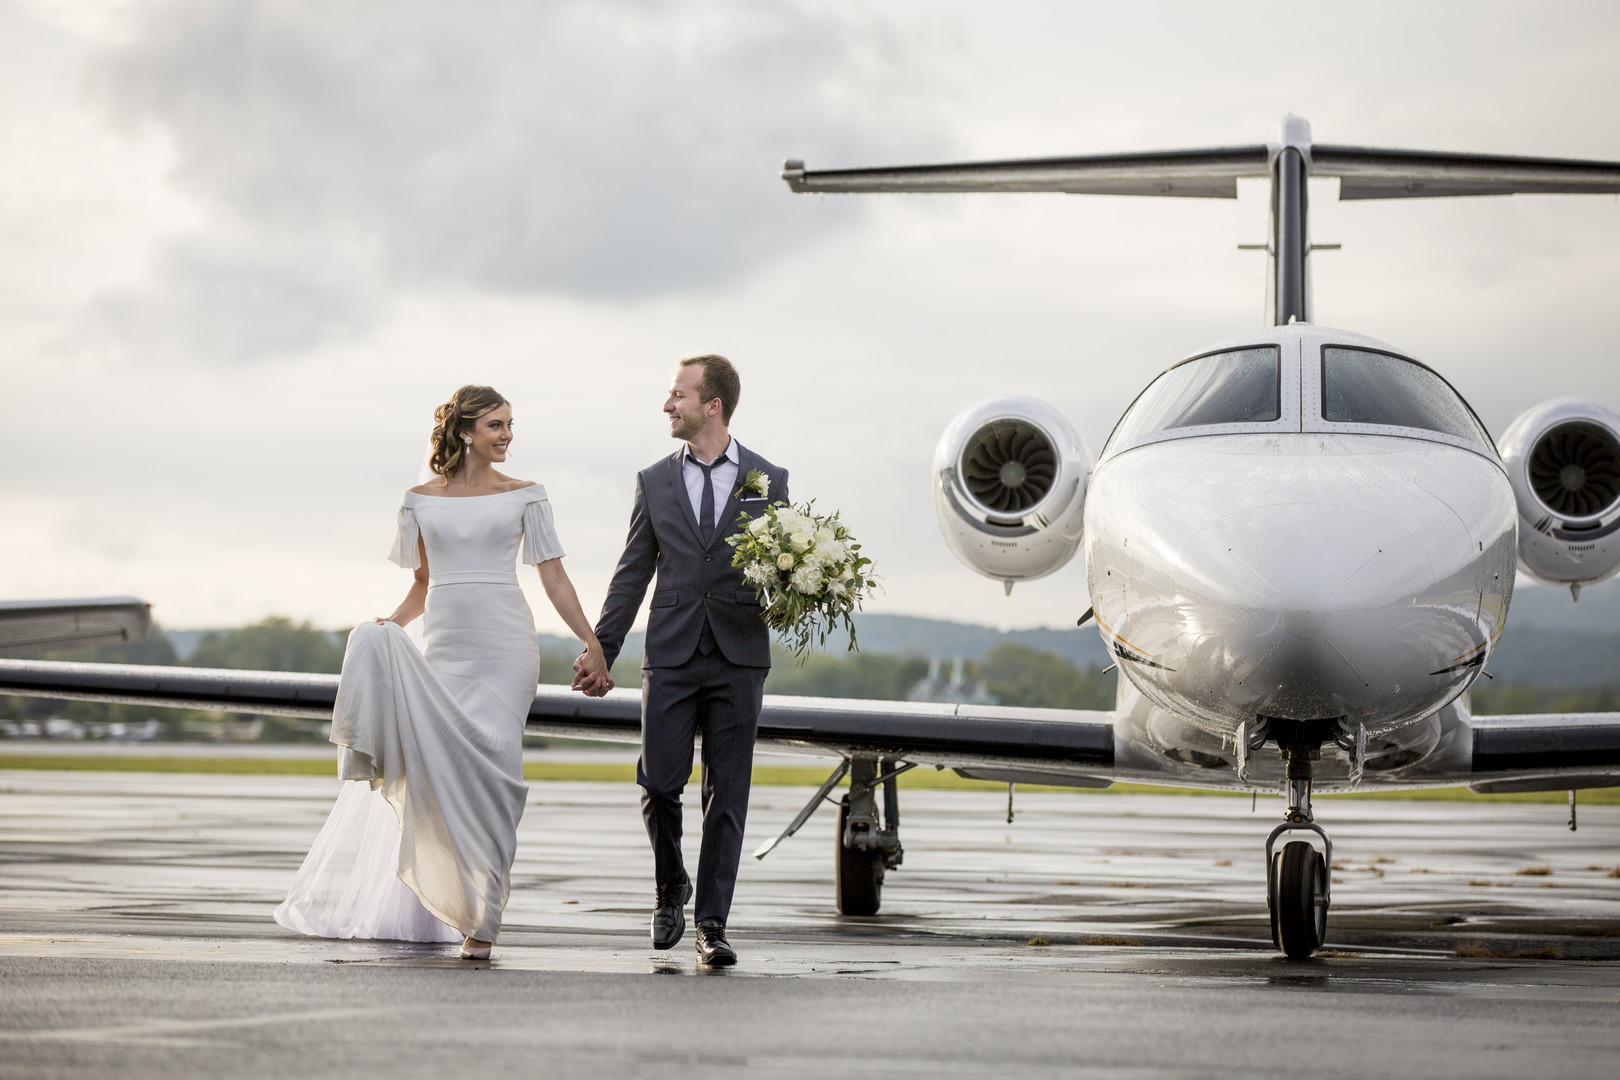 Vintage Aviation Theme Wedding Inspiration